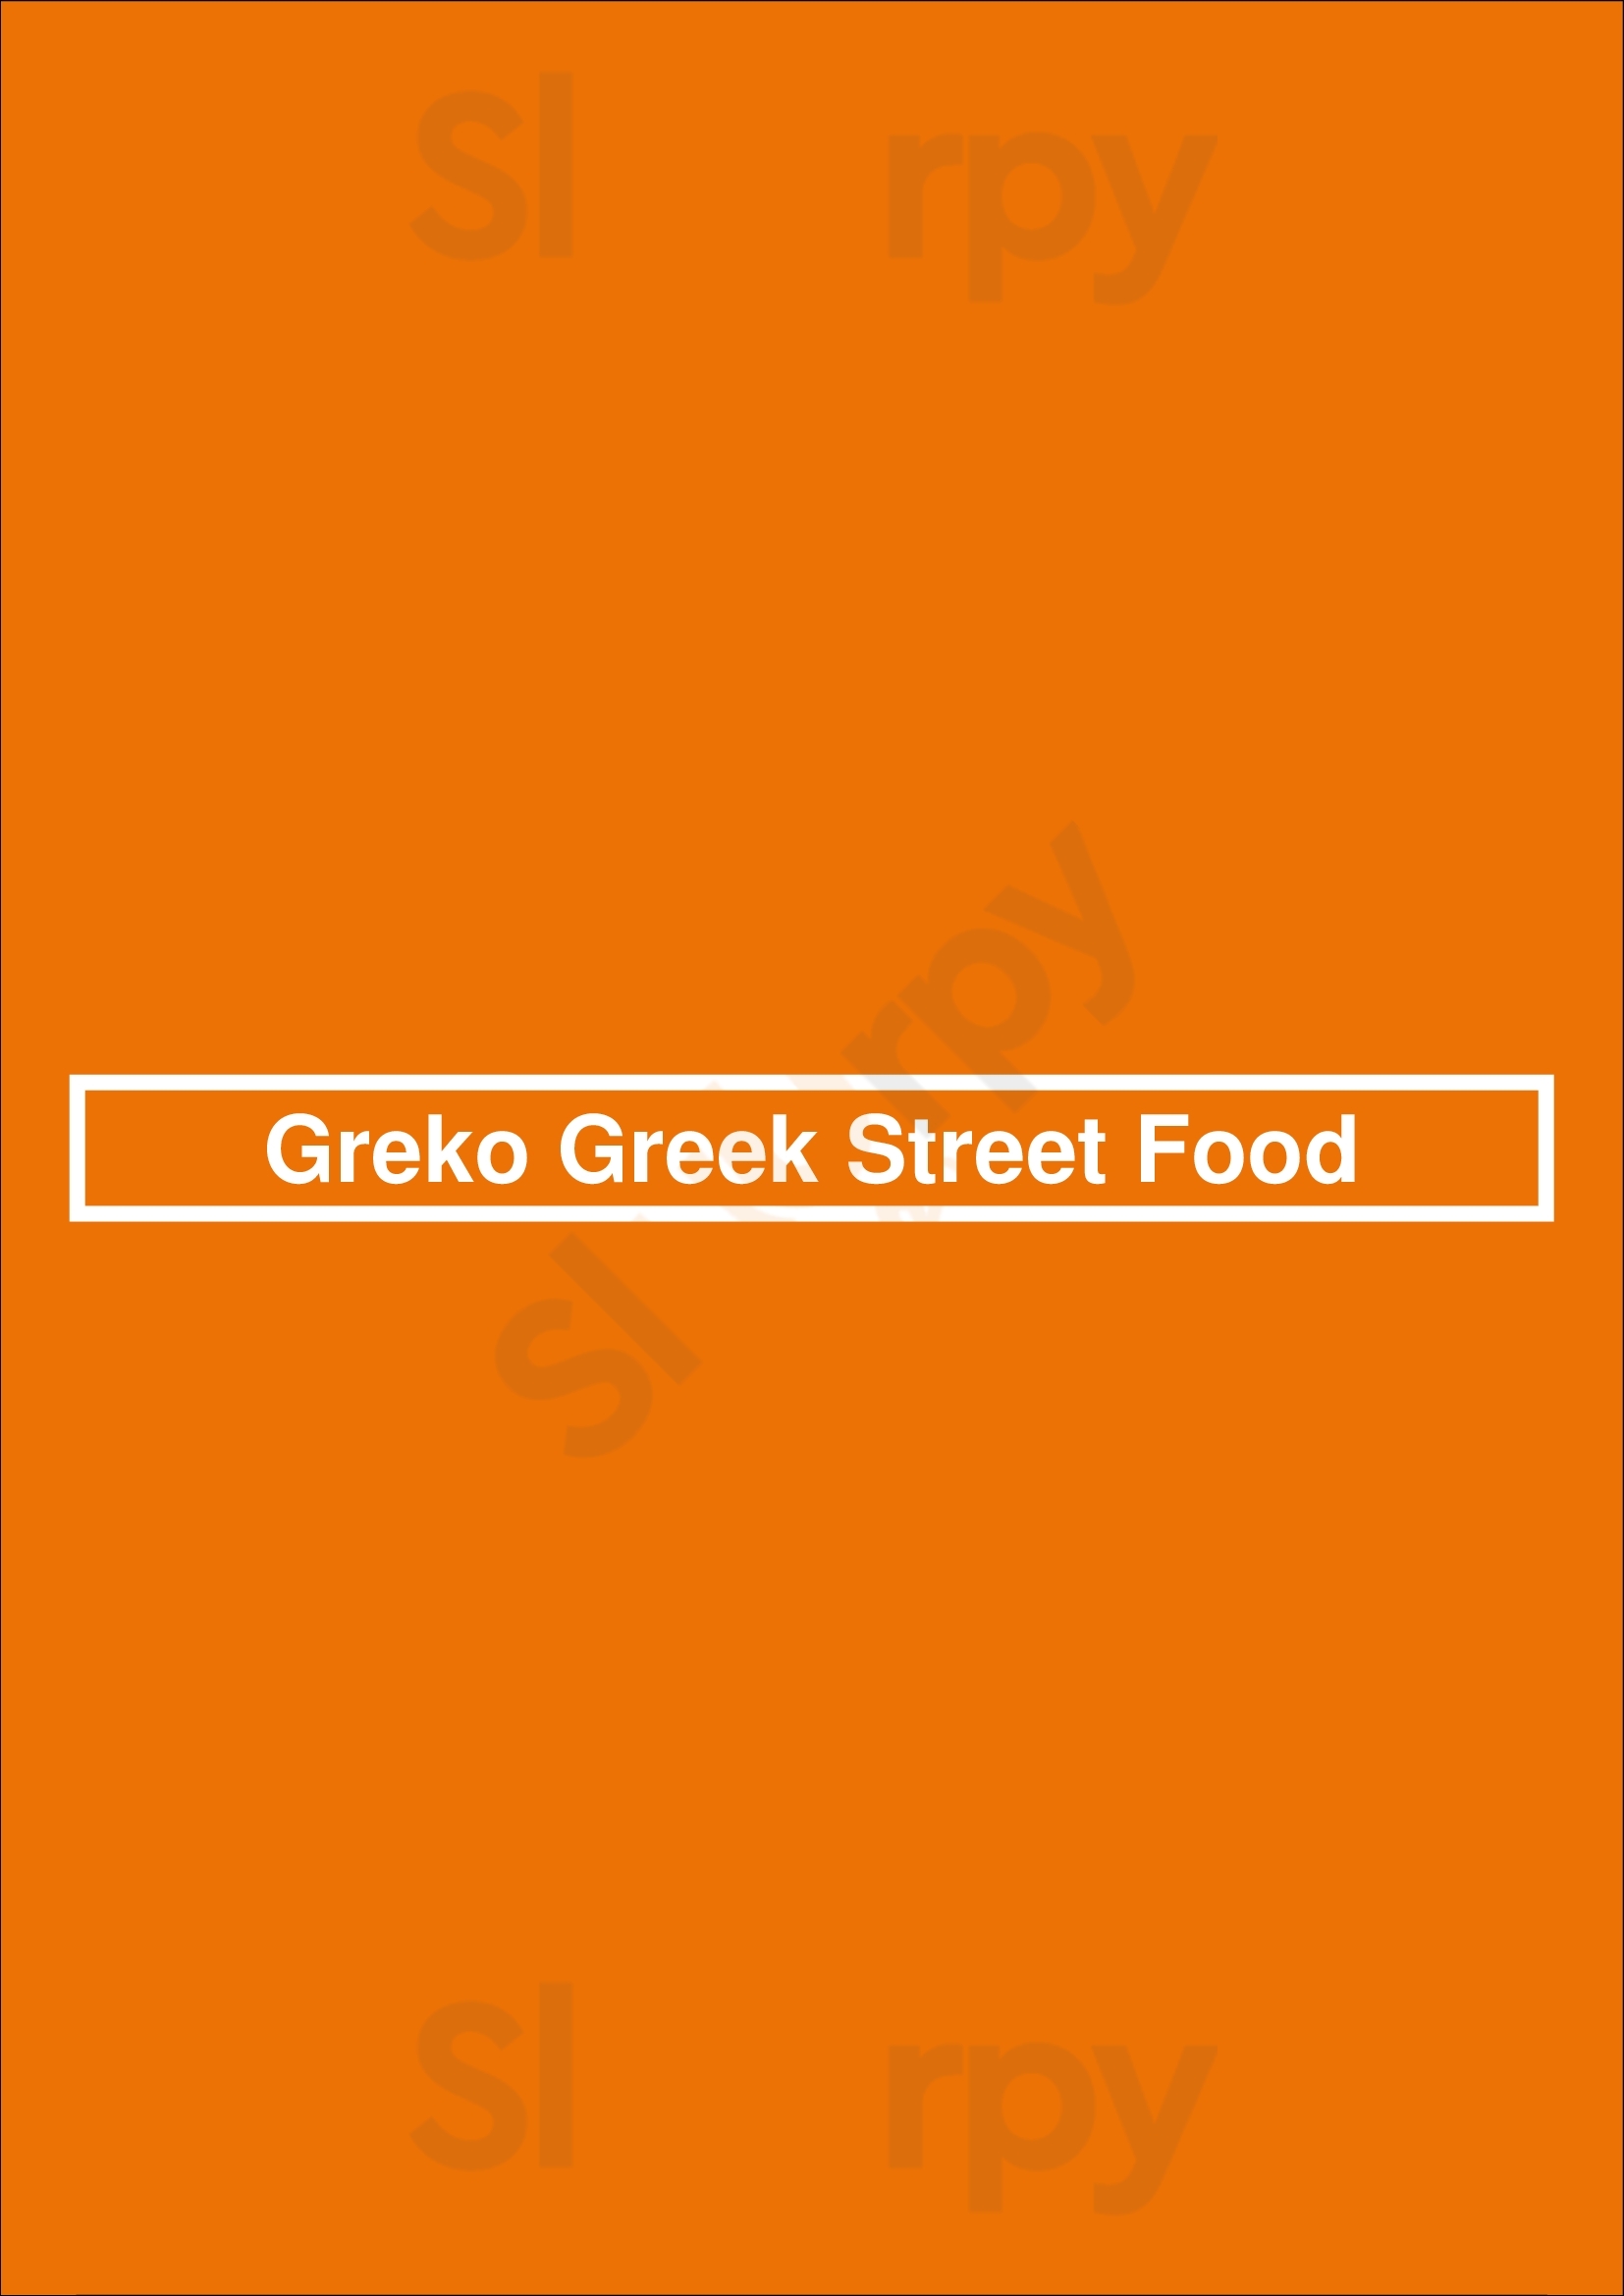 Greko Greek Street Food Nashville Menu - 1